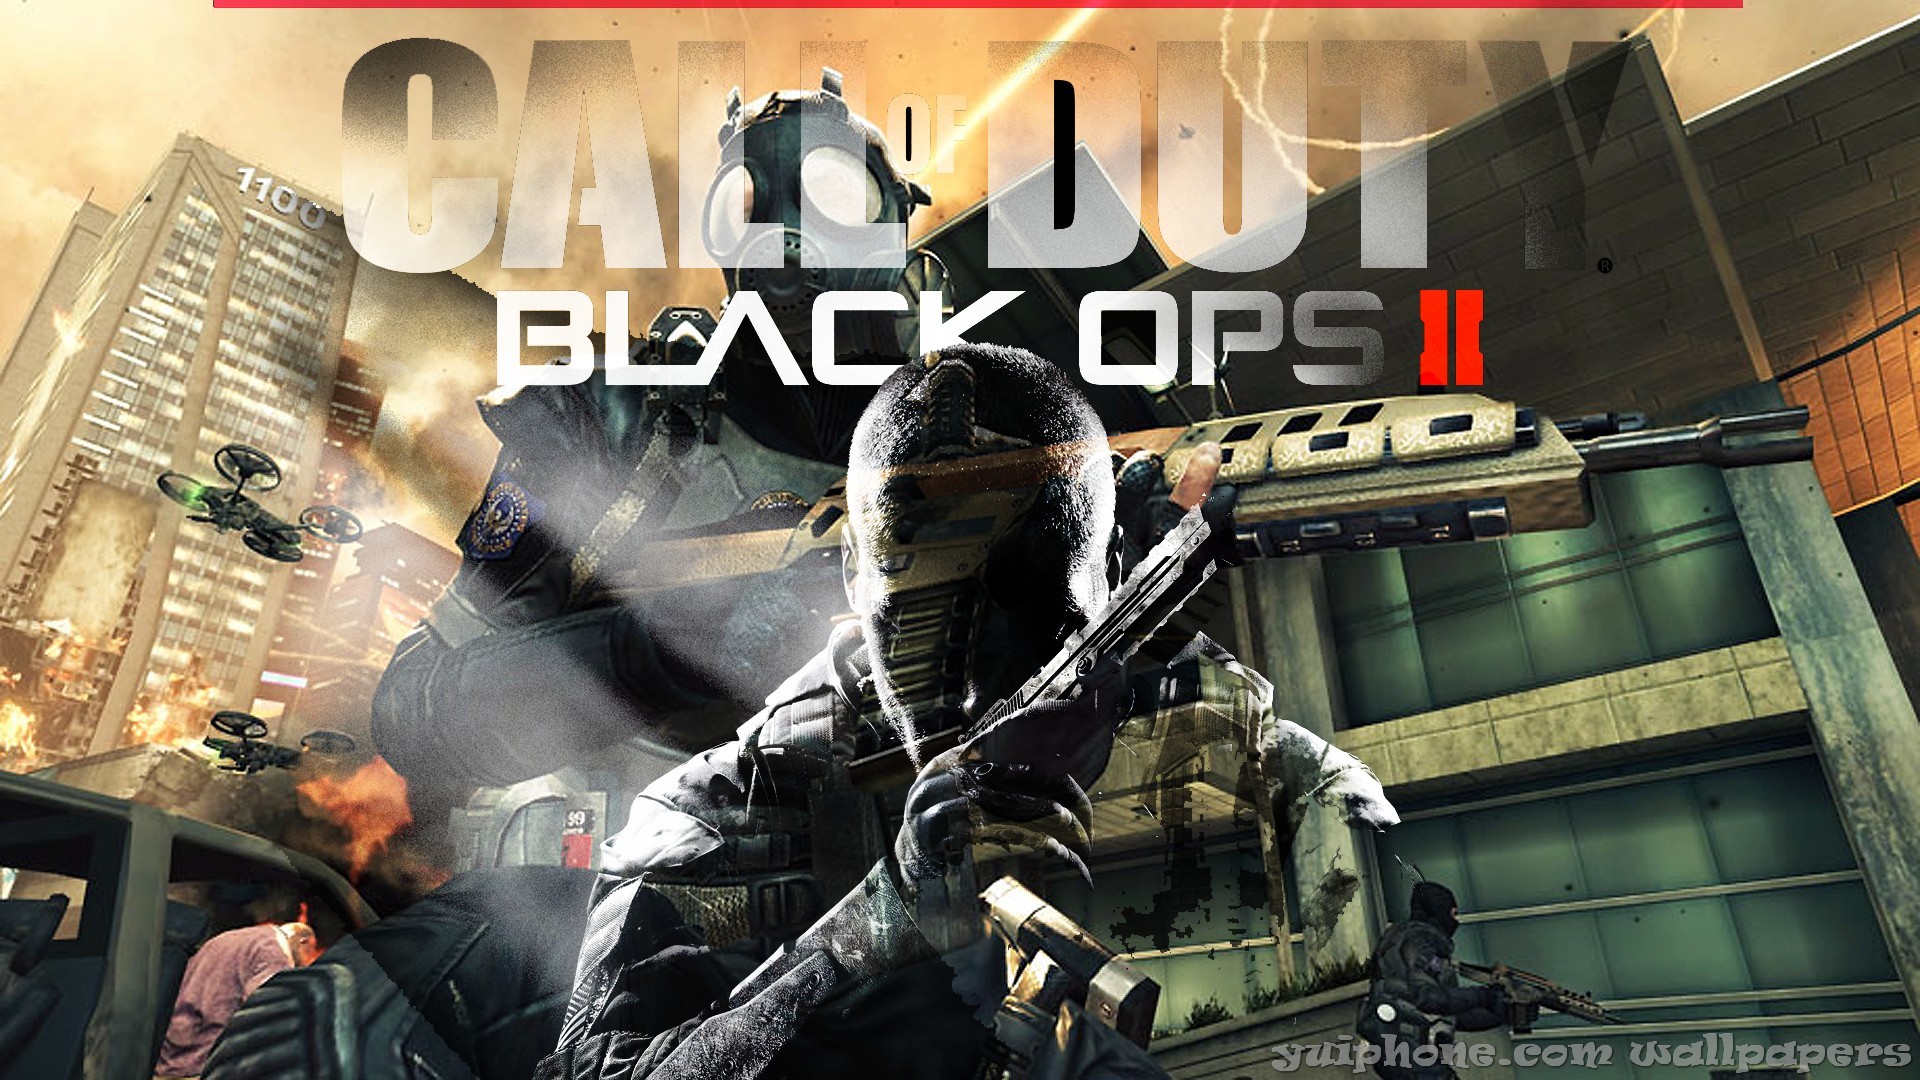 Ops 2 Zombies Wallpaper 1080pblack Ops 2 Hd Wallpapers - Cordis Die From Call Of Duty Black Ops Ii - HD Wallpaper 